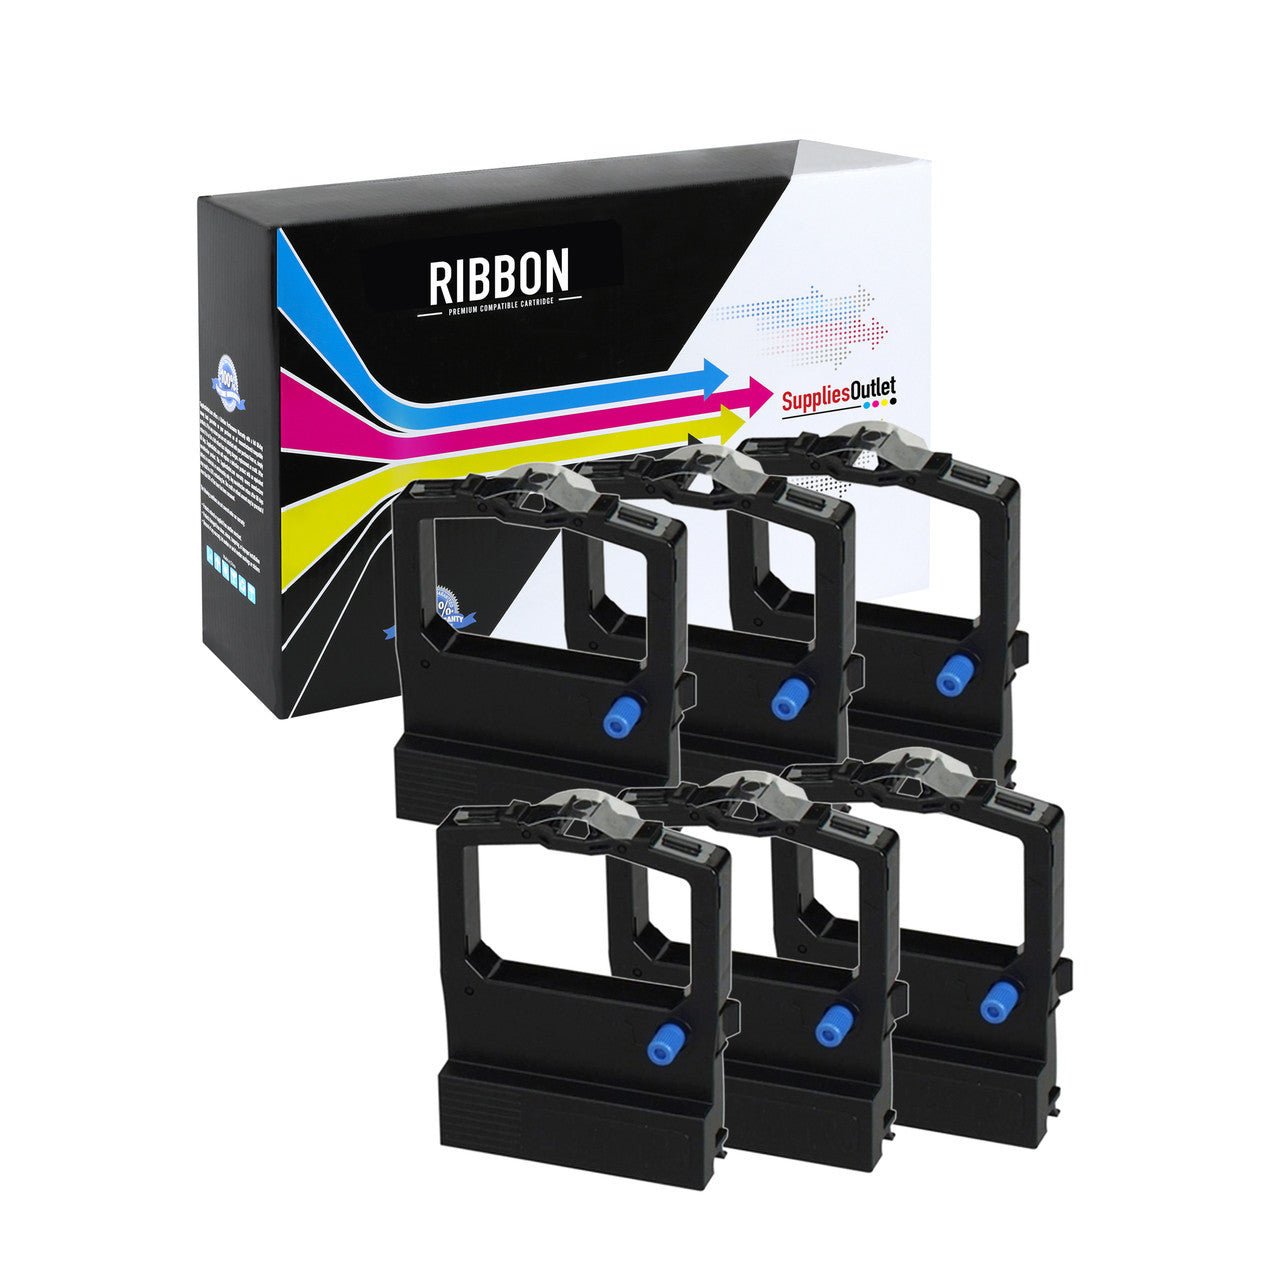 Compatible Okidata 52106001 Printer Ribbon (Black,6 Pack) by SuppliesOutlet